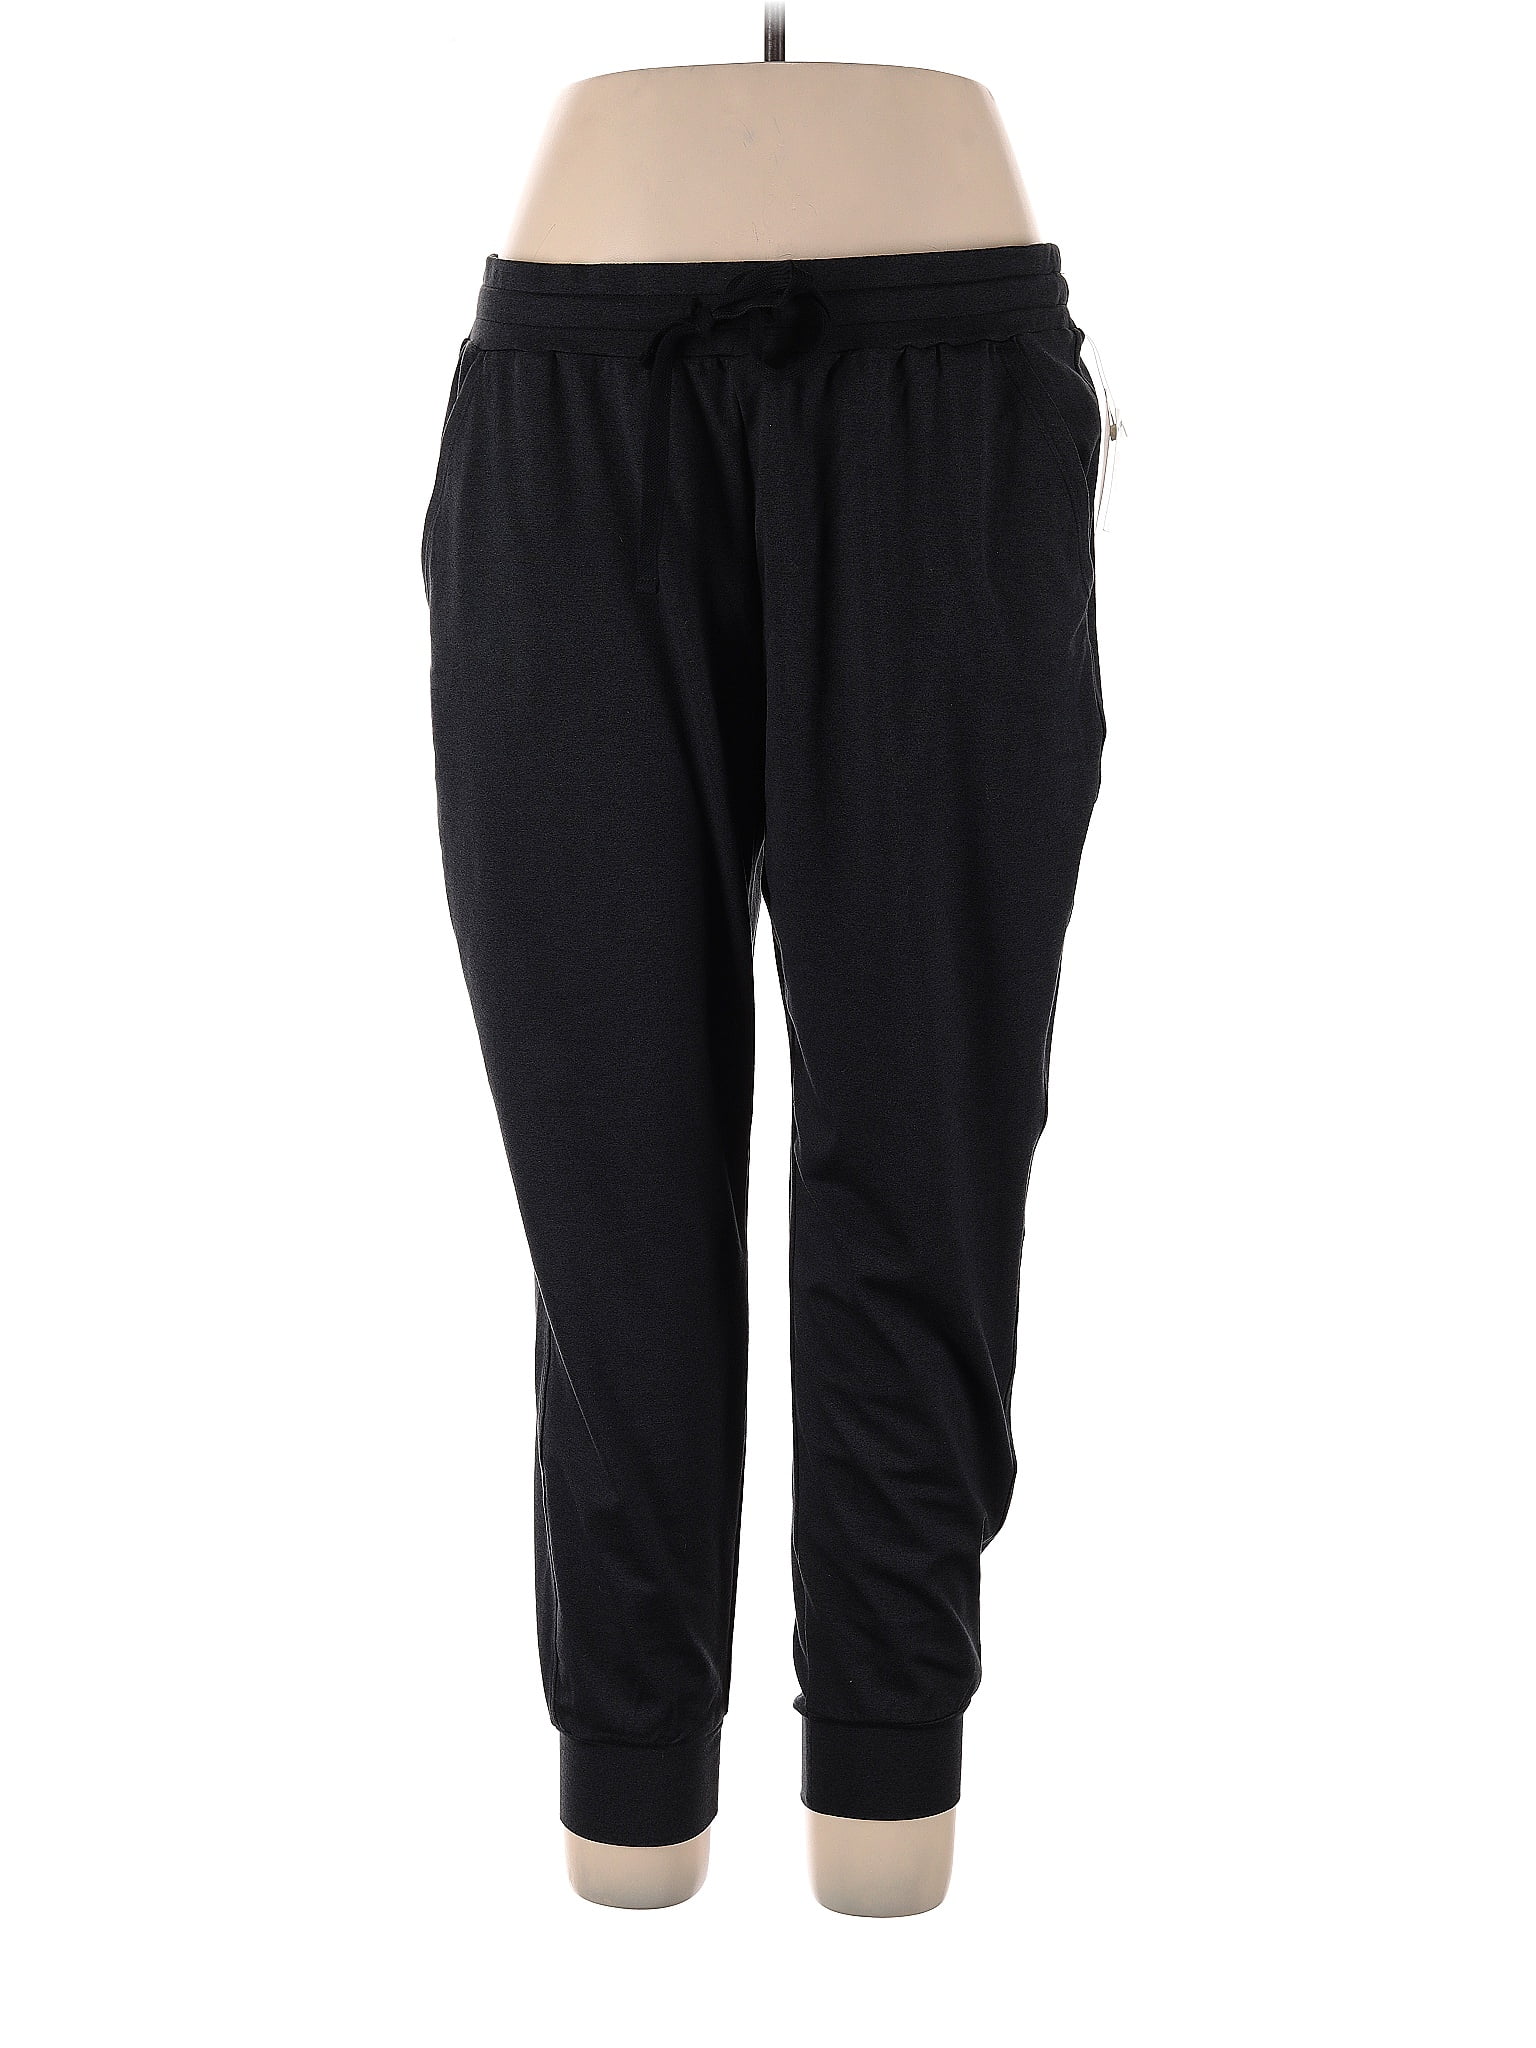 Zella Black Casual Pants Size XL - 65% off